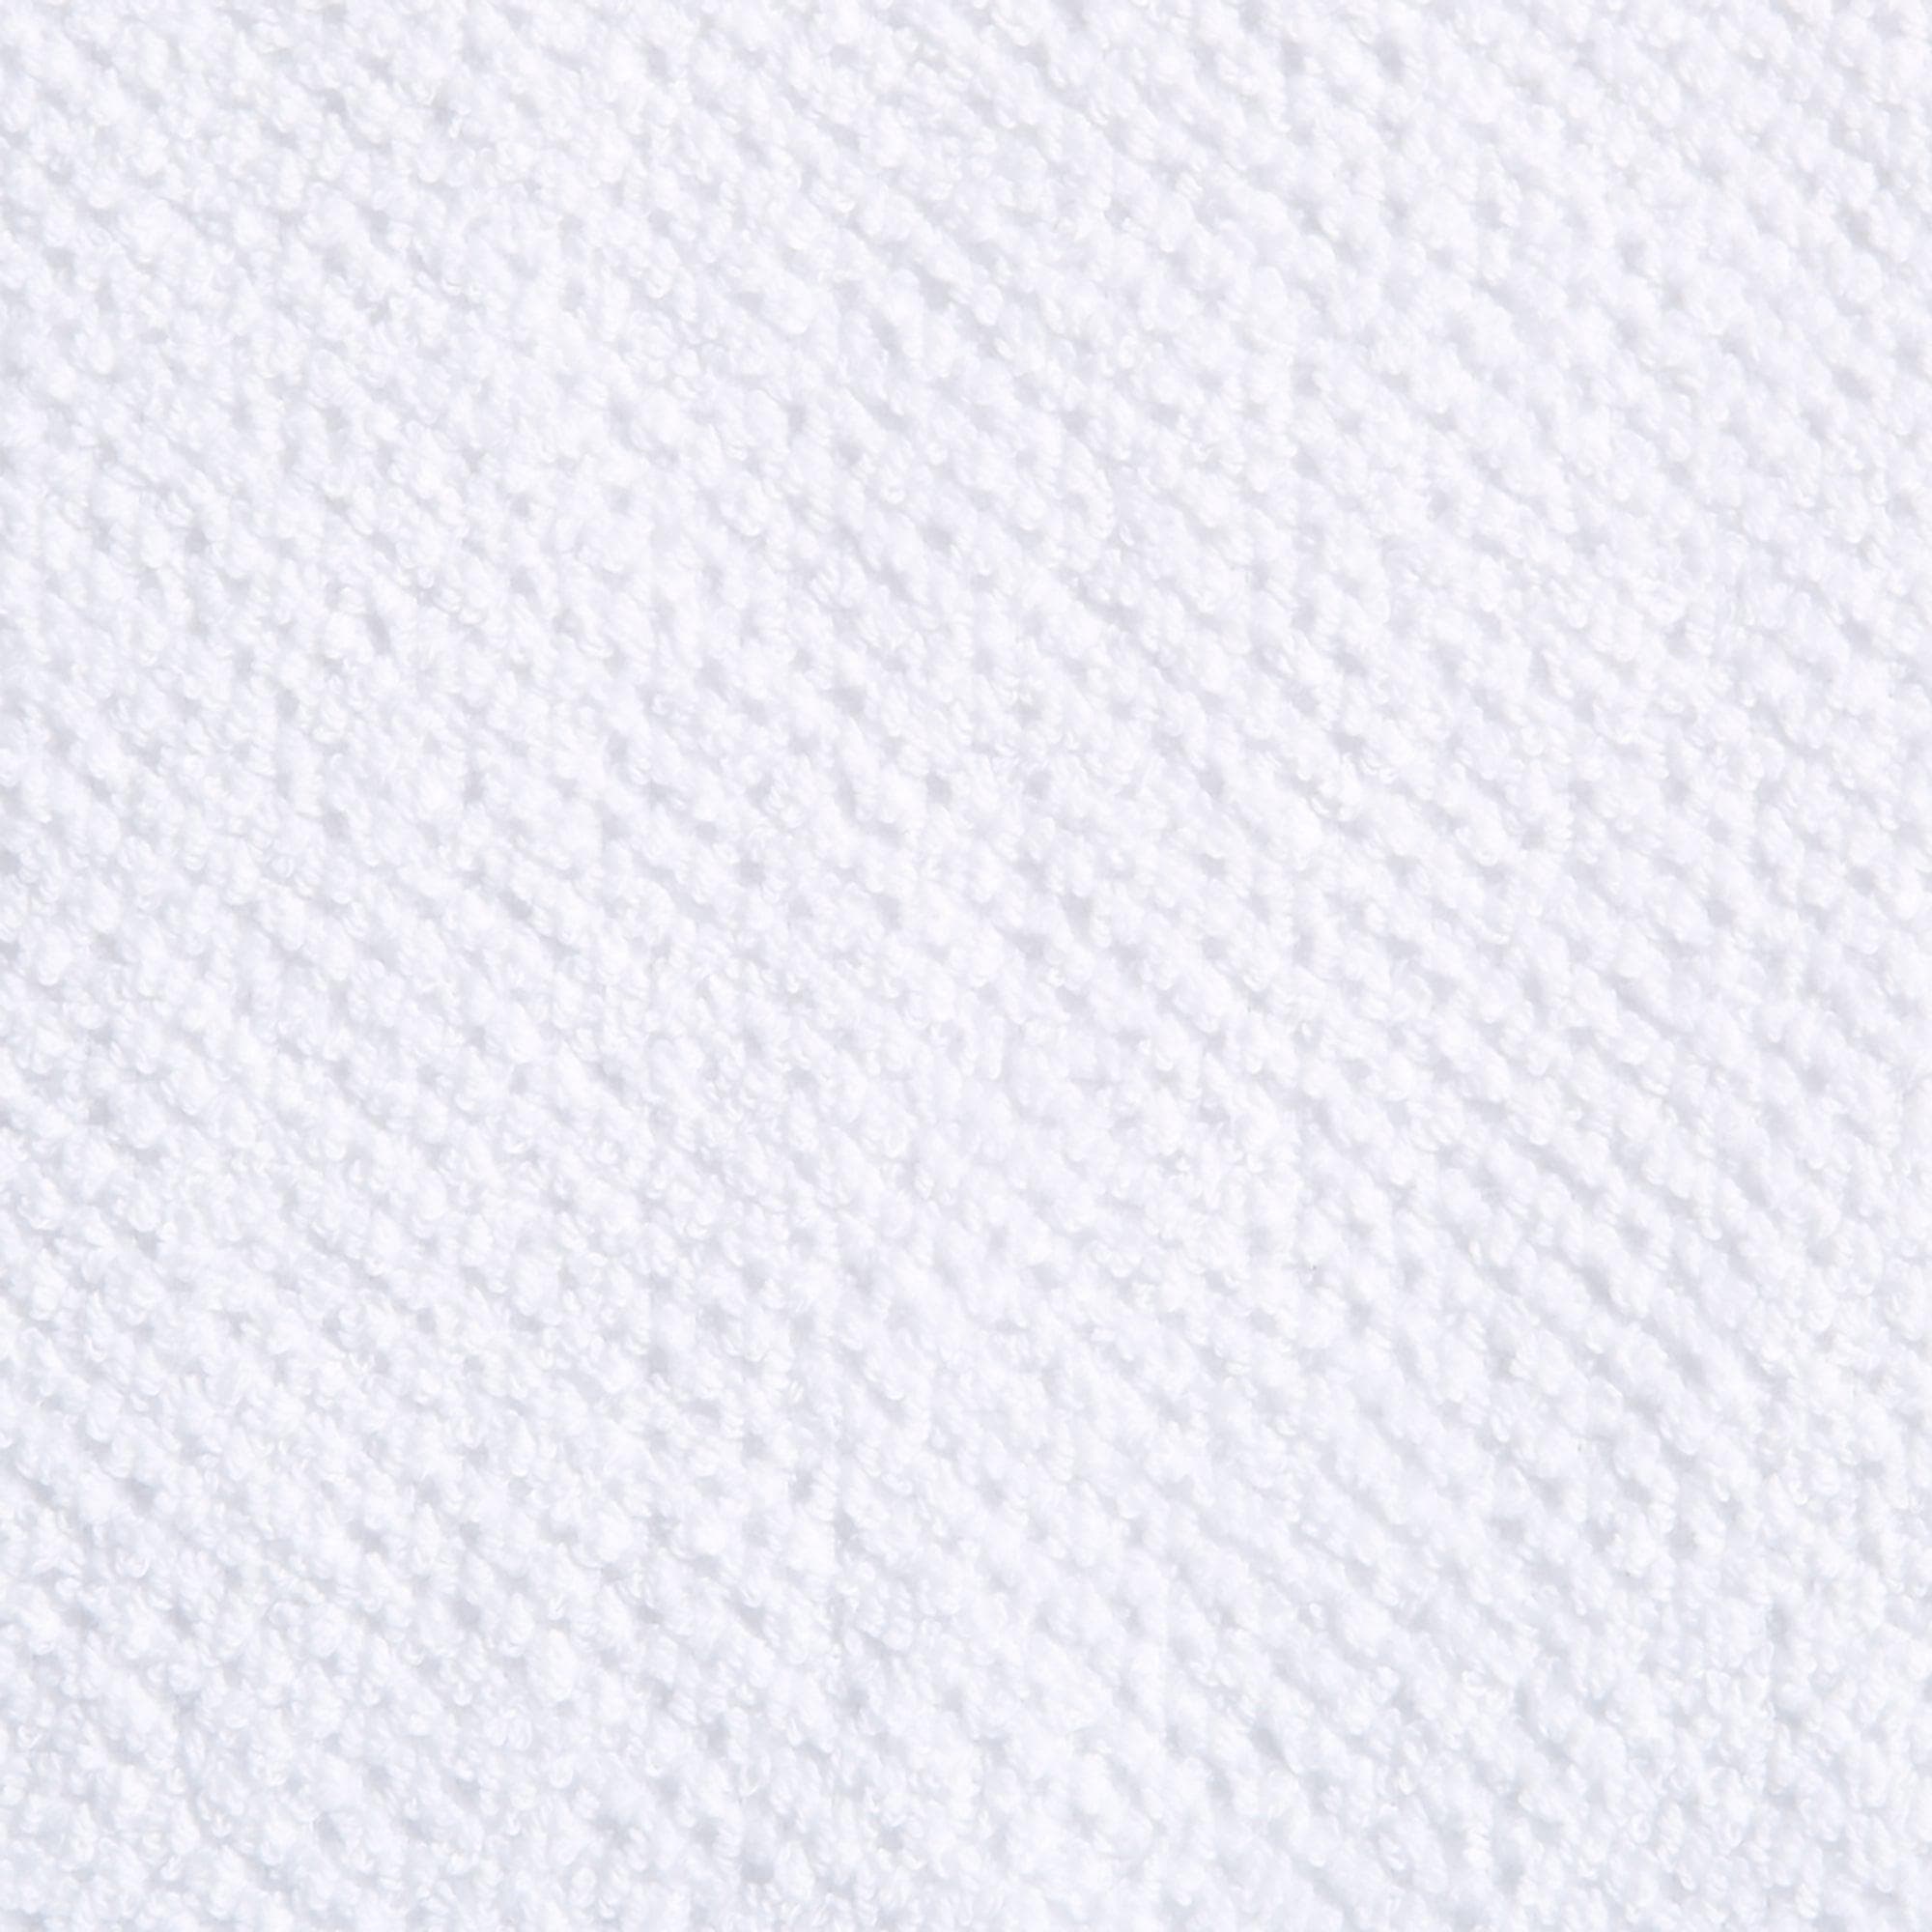 Simpli-Magic 79456 Popcorn Textured Bath Towels, 4 Pack, Blue - The Clean  Store